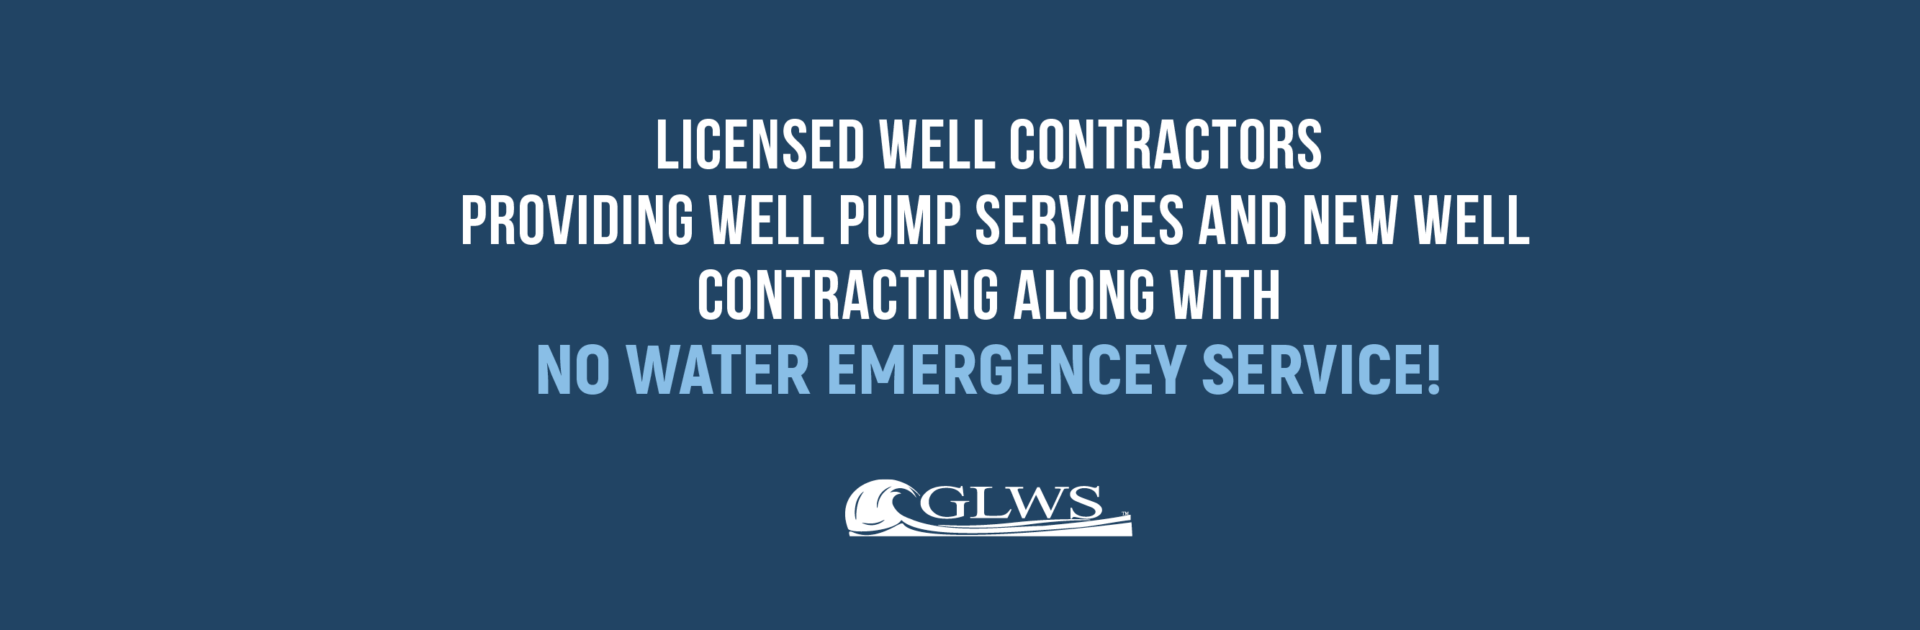 GLWS-Licensed Well Pump Contractors